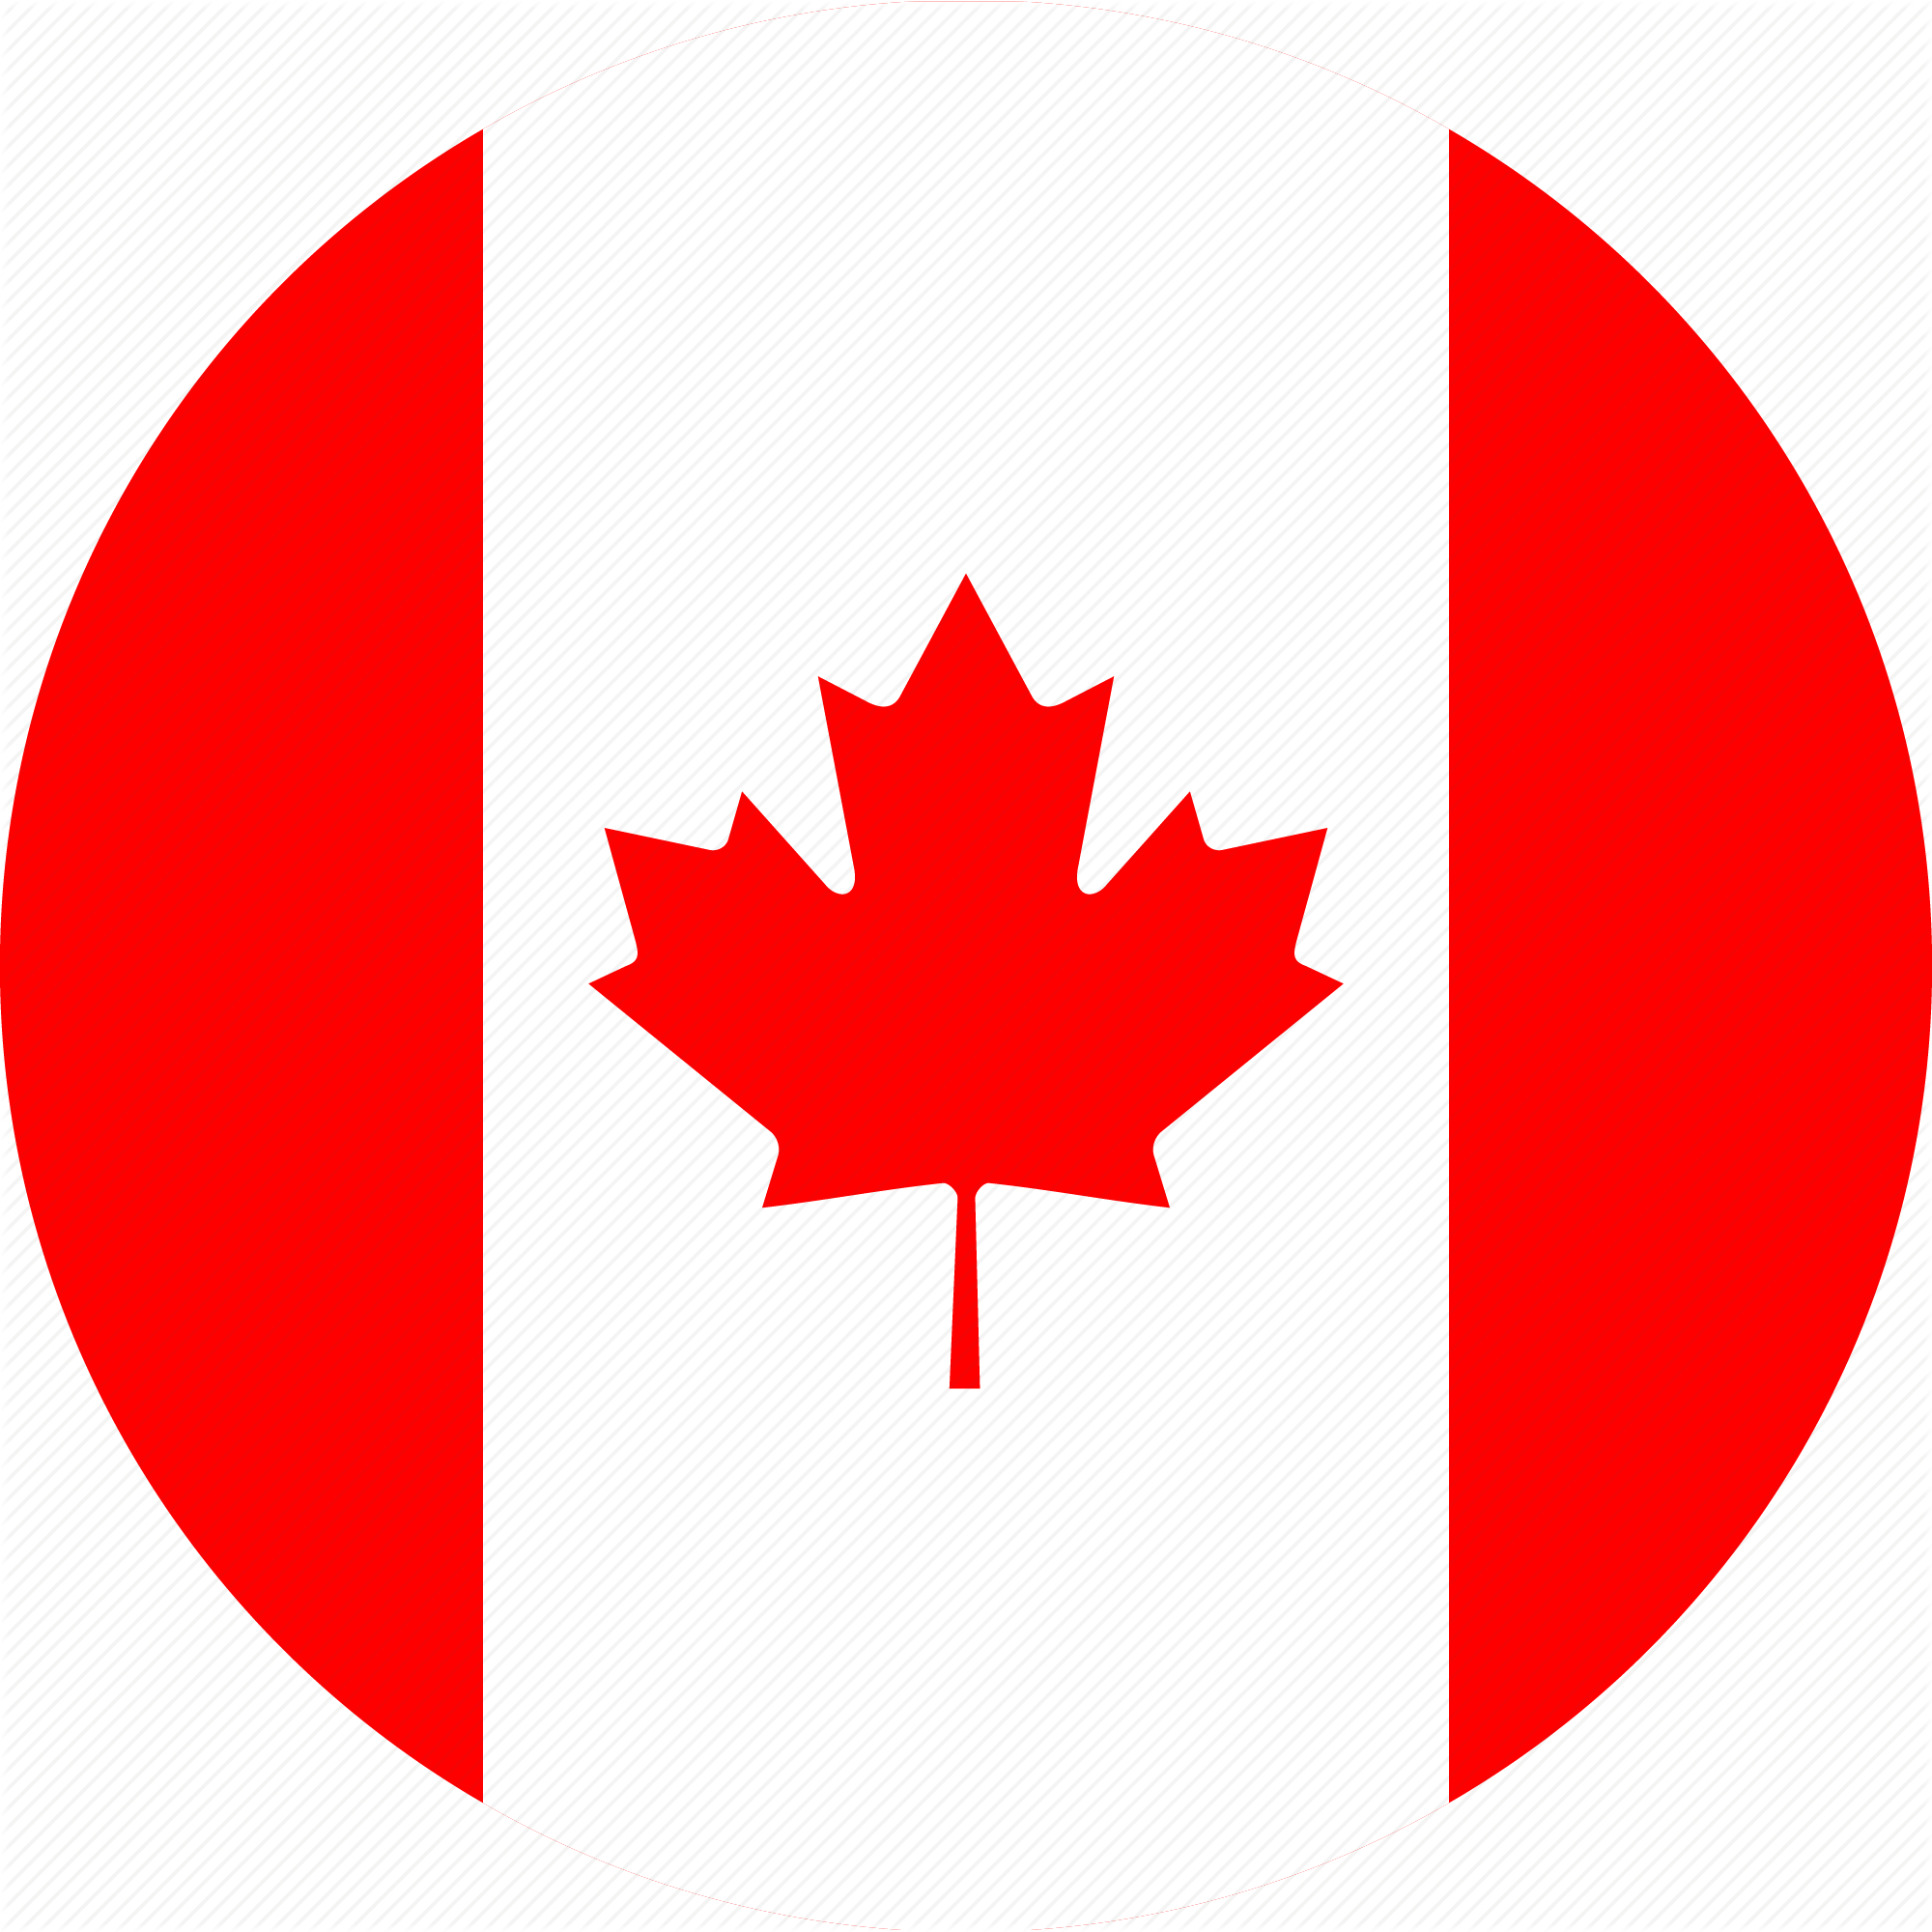 Canada. Icon set stock vector. Illustration of canada - 48514754